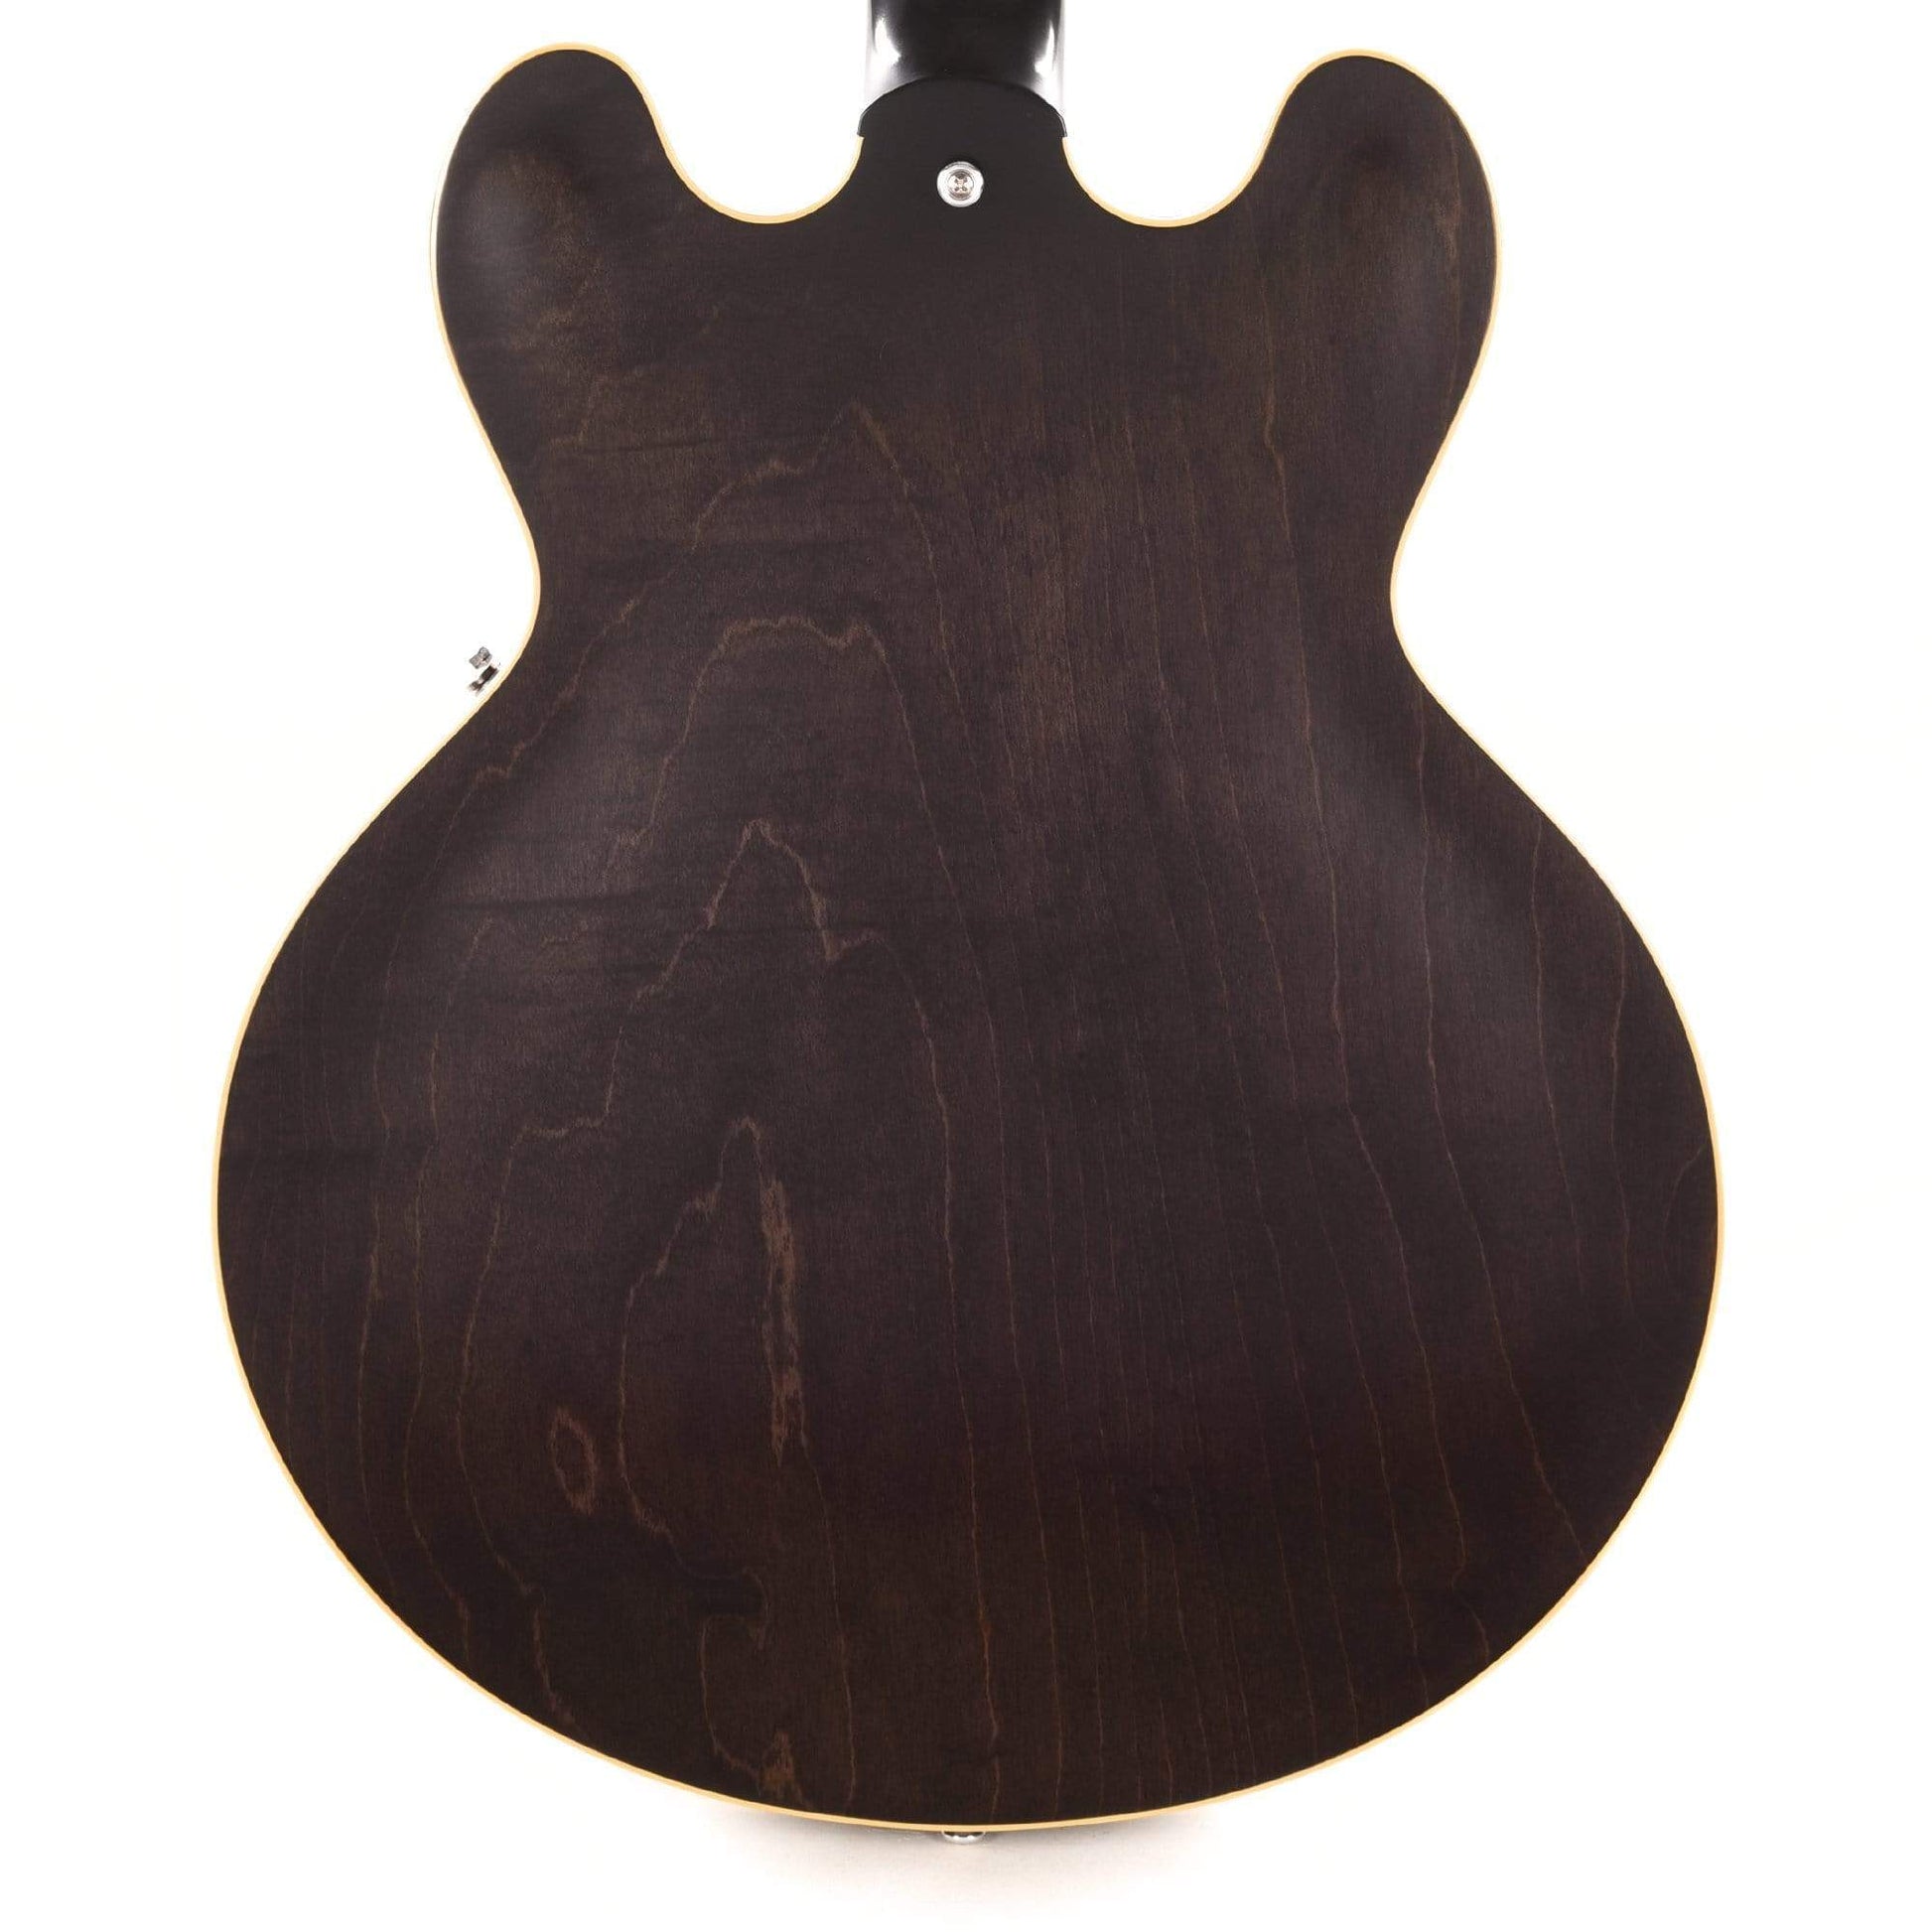 Gibson USA ES-335 Satin Trans Black Electric Guitars / Semi-Hollow